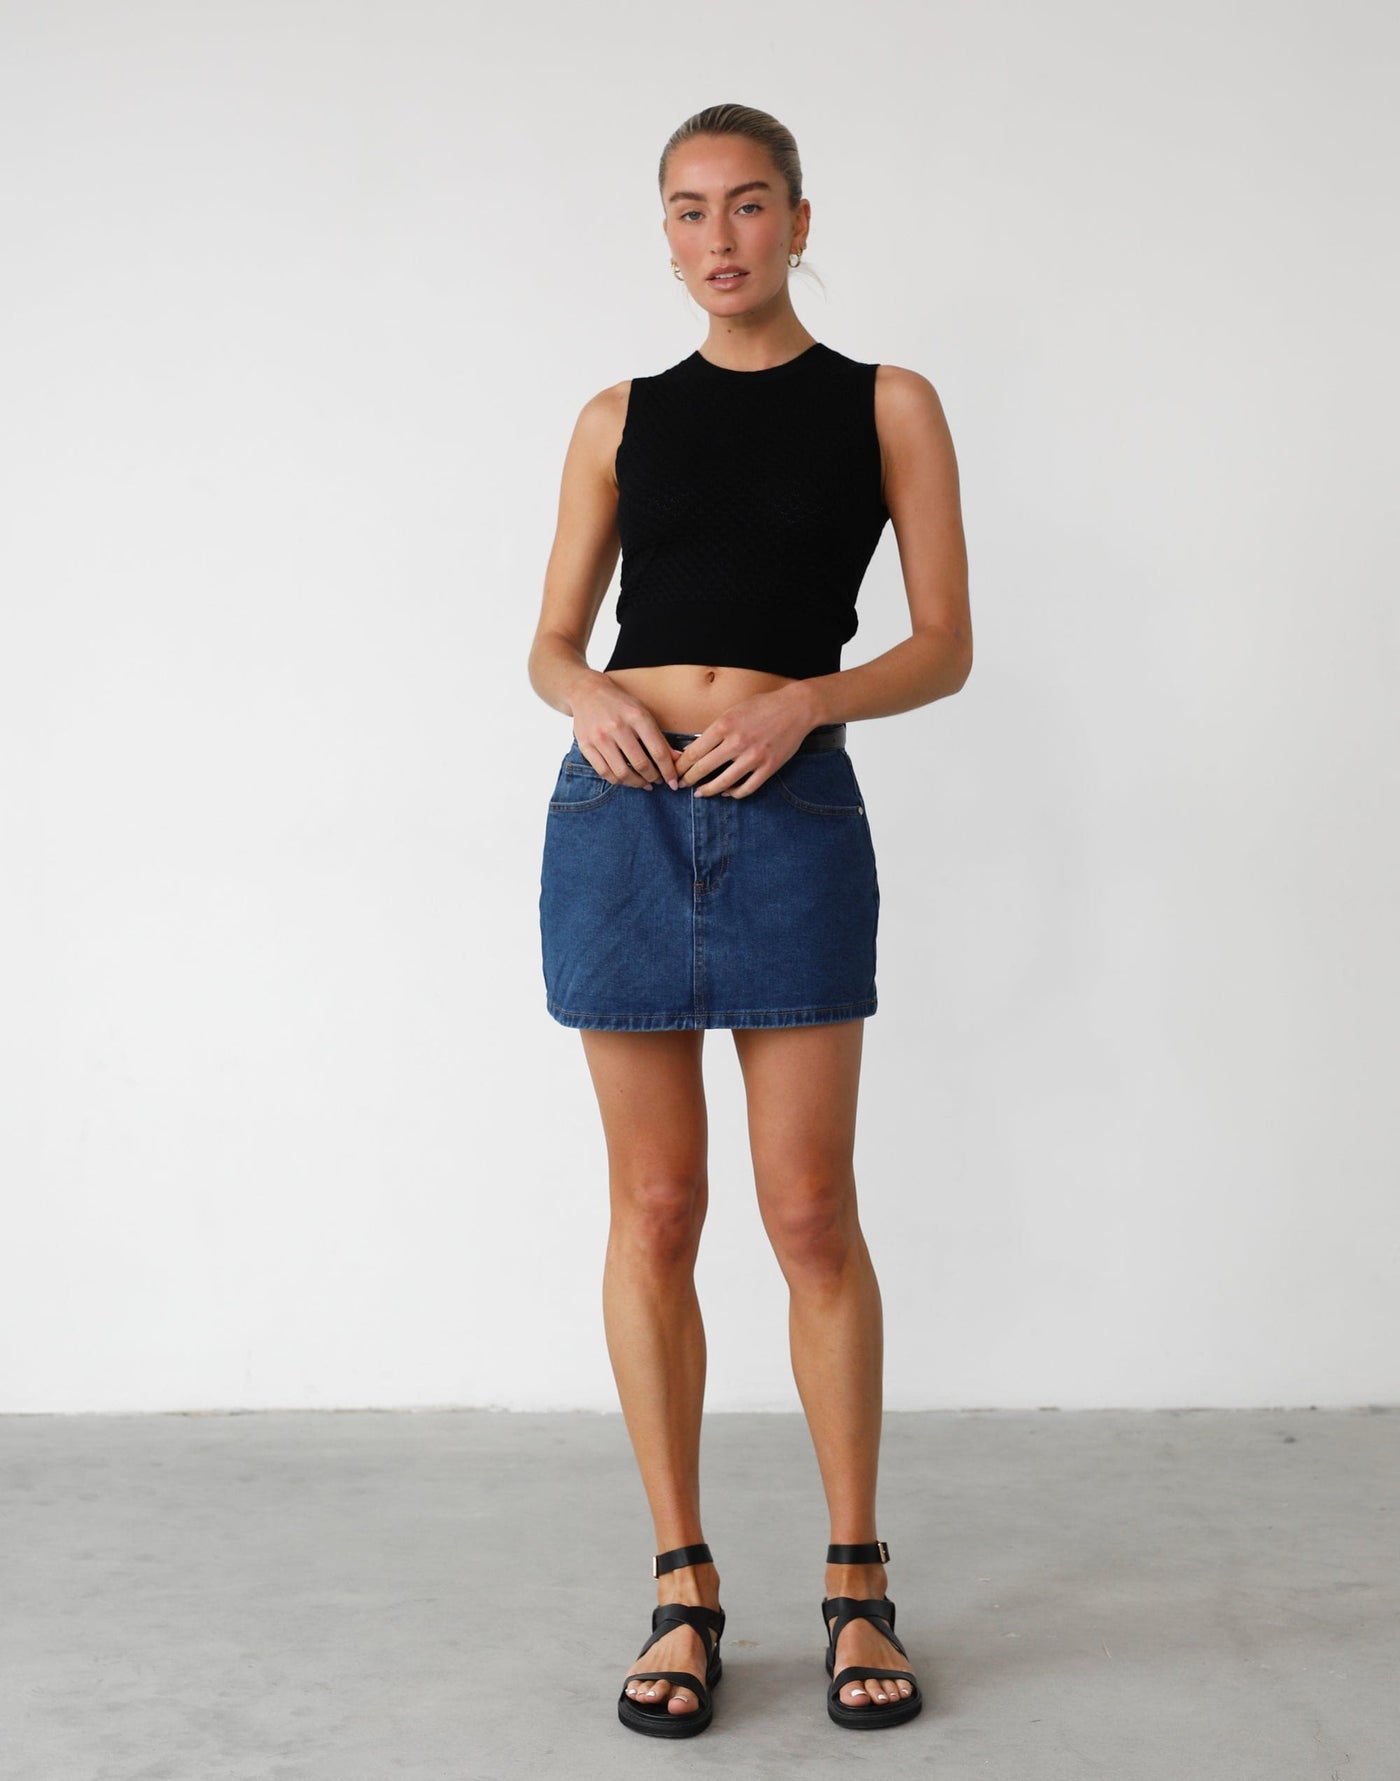 Cooran Knit Crop Top (Black) - Sleeveless Knit Crop Top - Women's Top - Charcoal Clothing